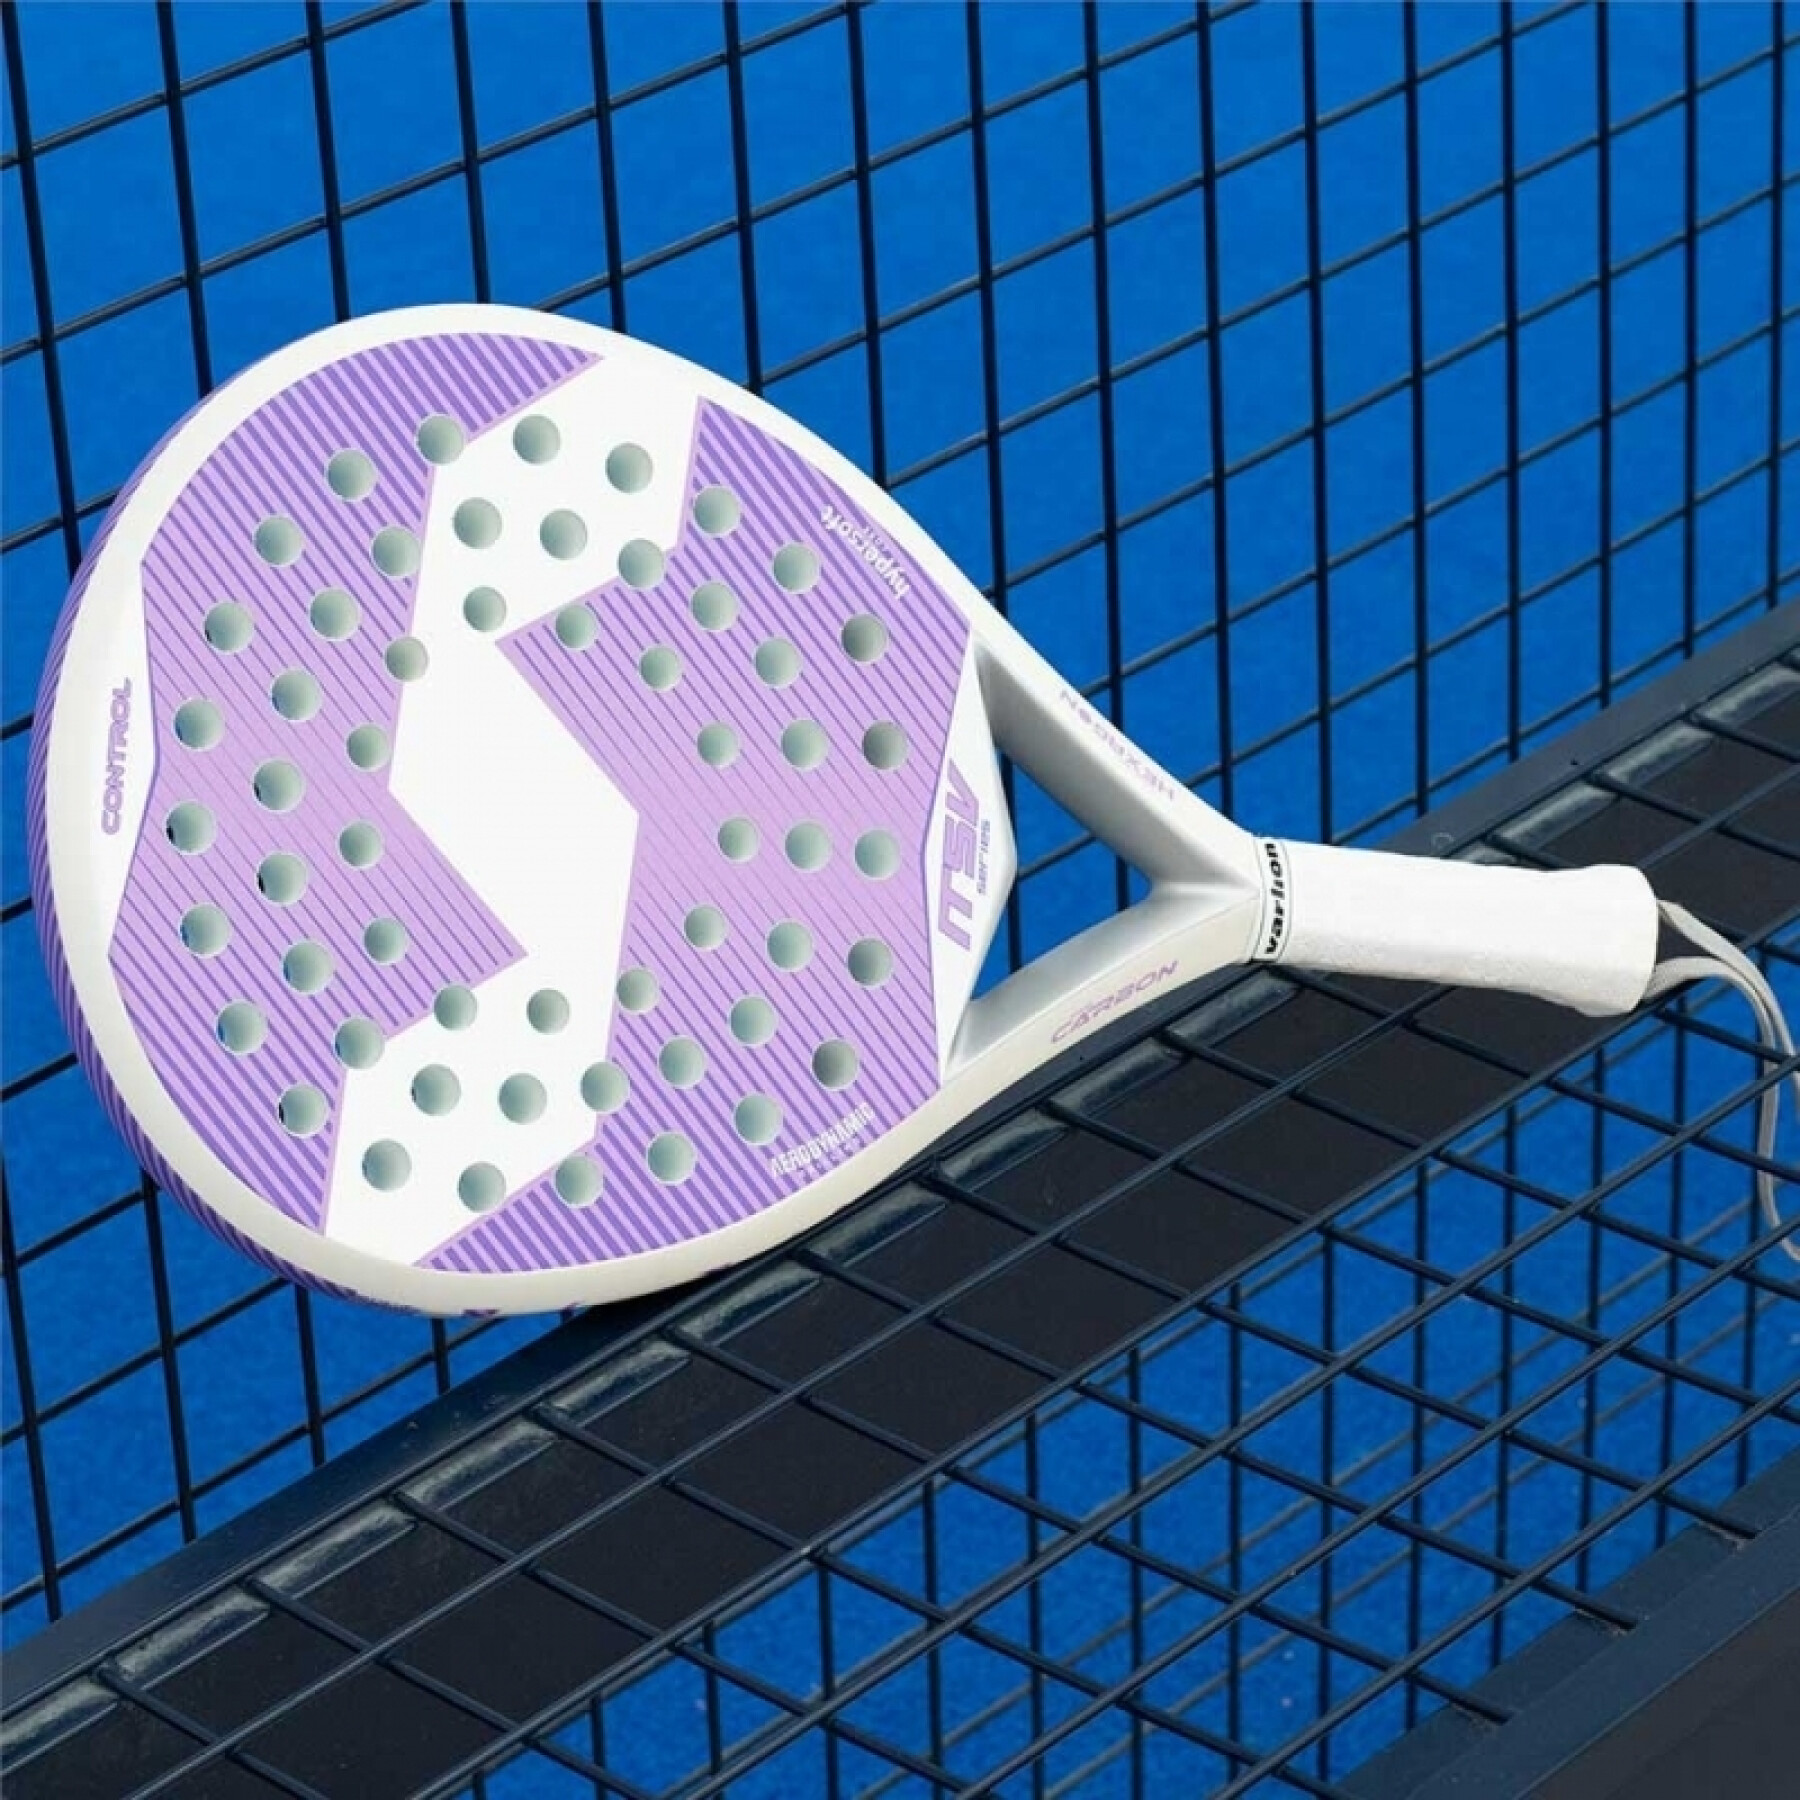 Paddle racket Varlion Lw Hexagon 8.8